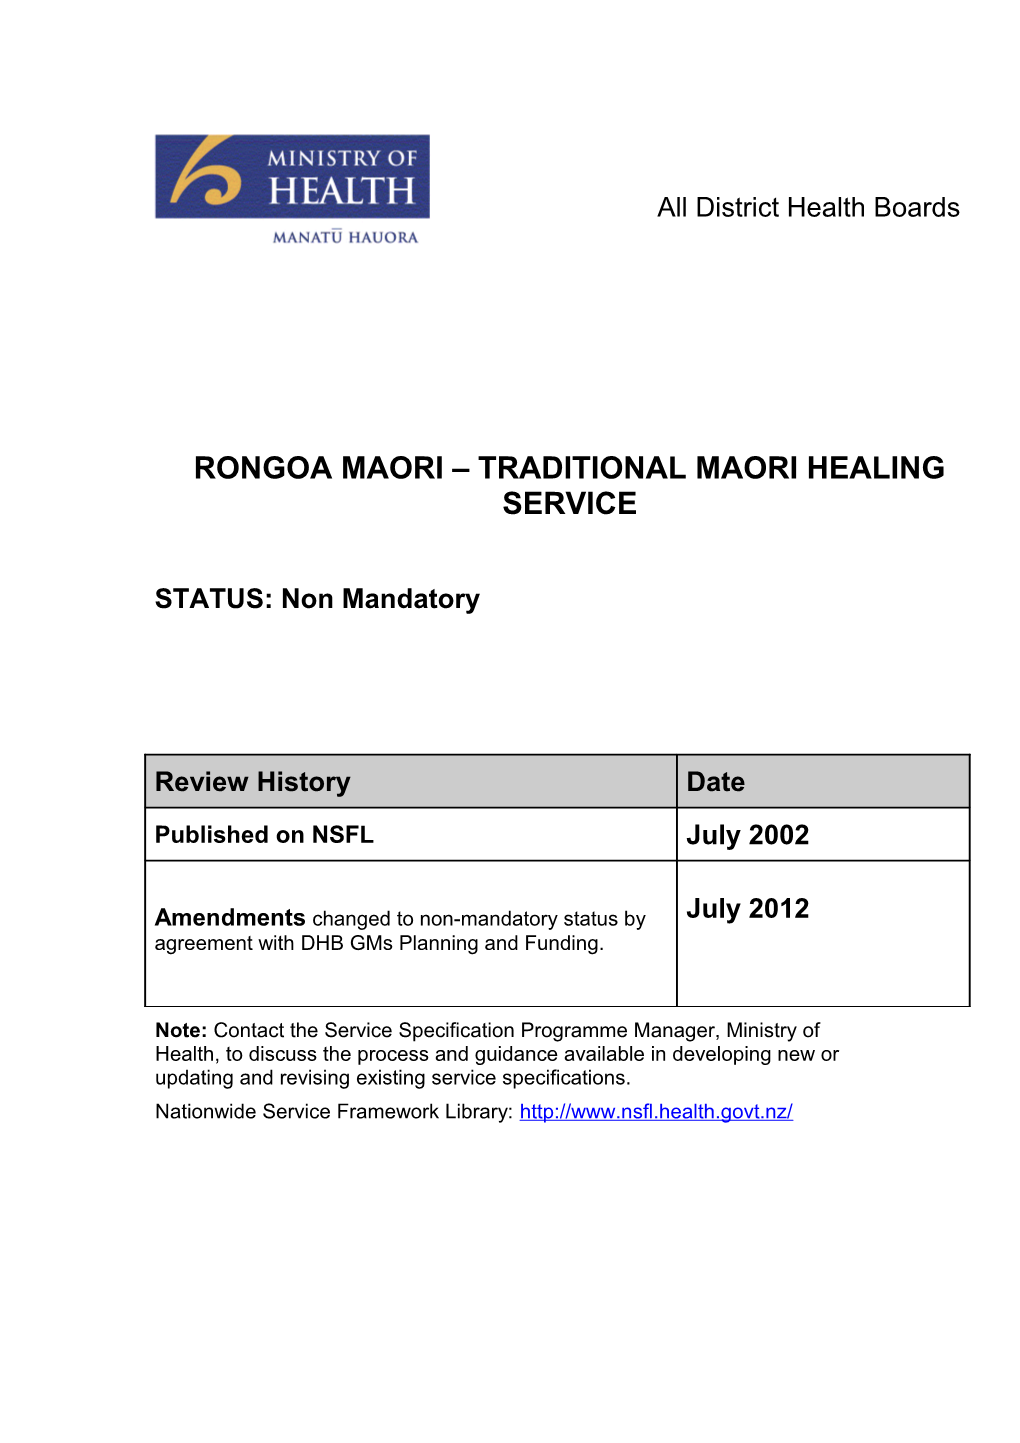 Rongoa Maori - Traditional Maori Healing Service